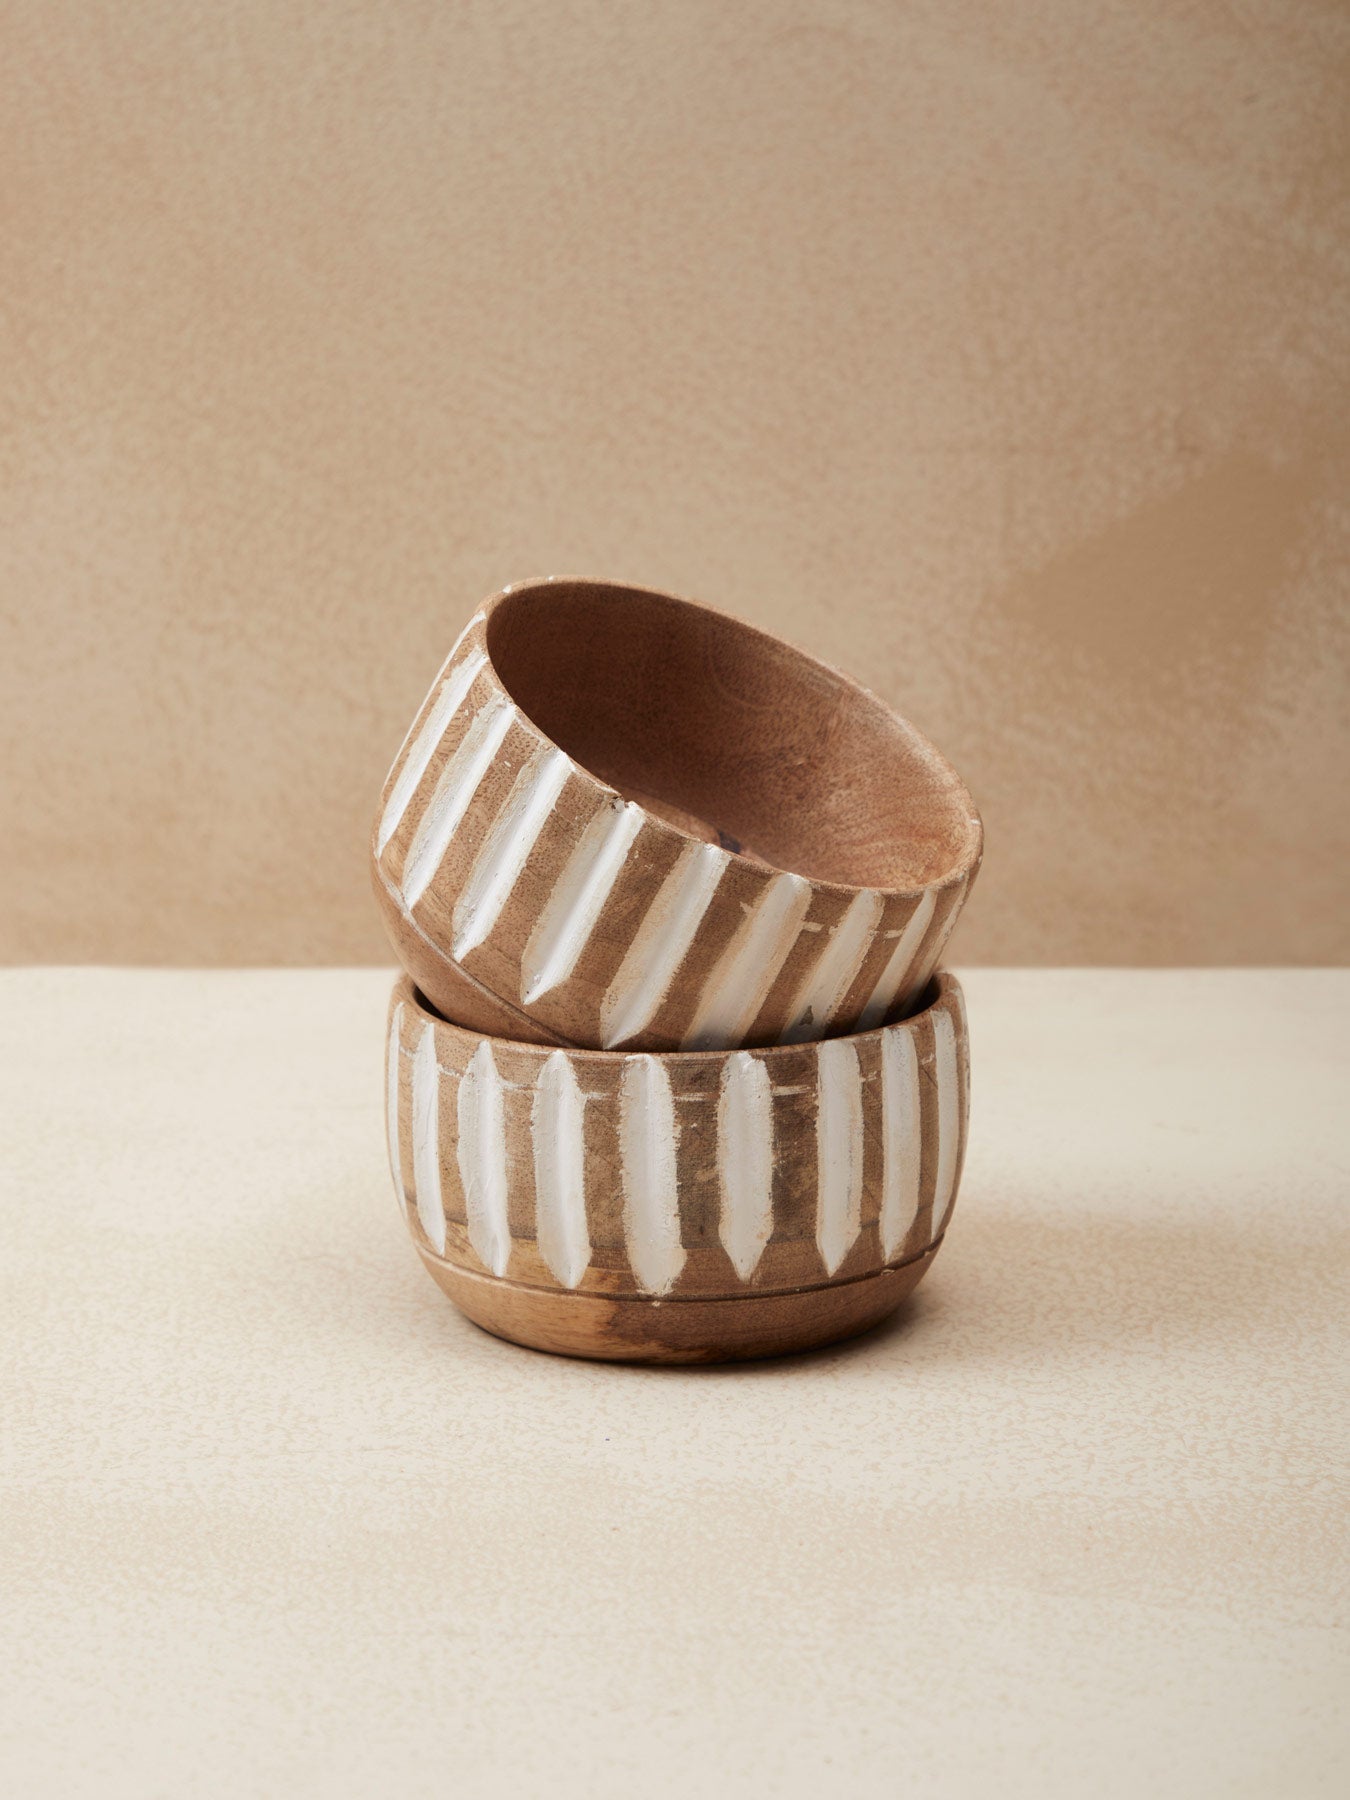 Striped Wood Nut Bowls